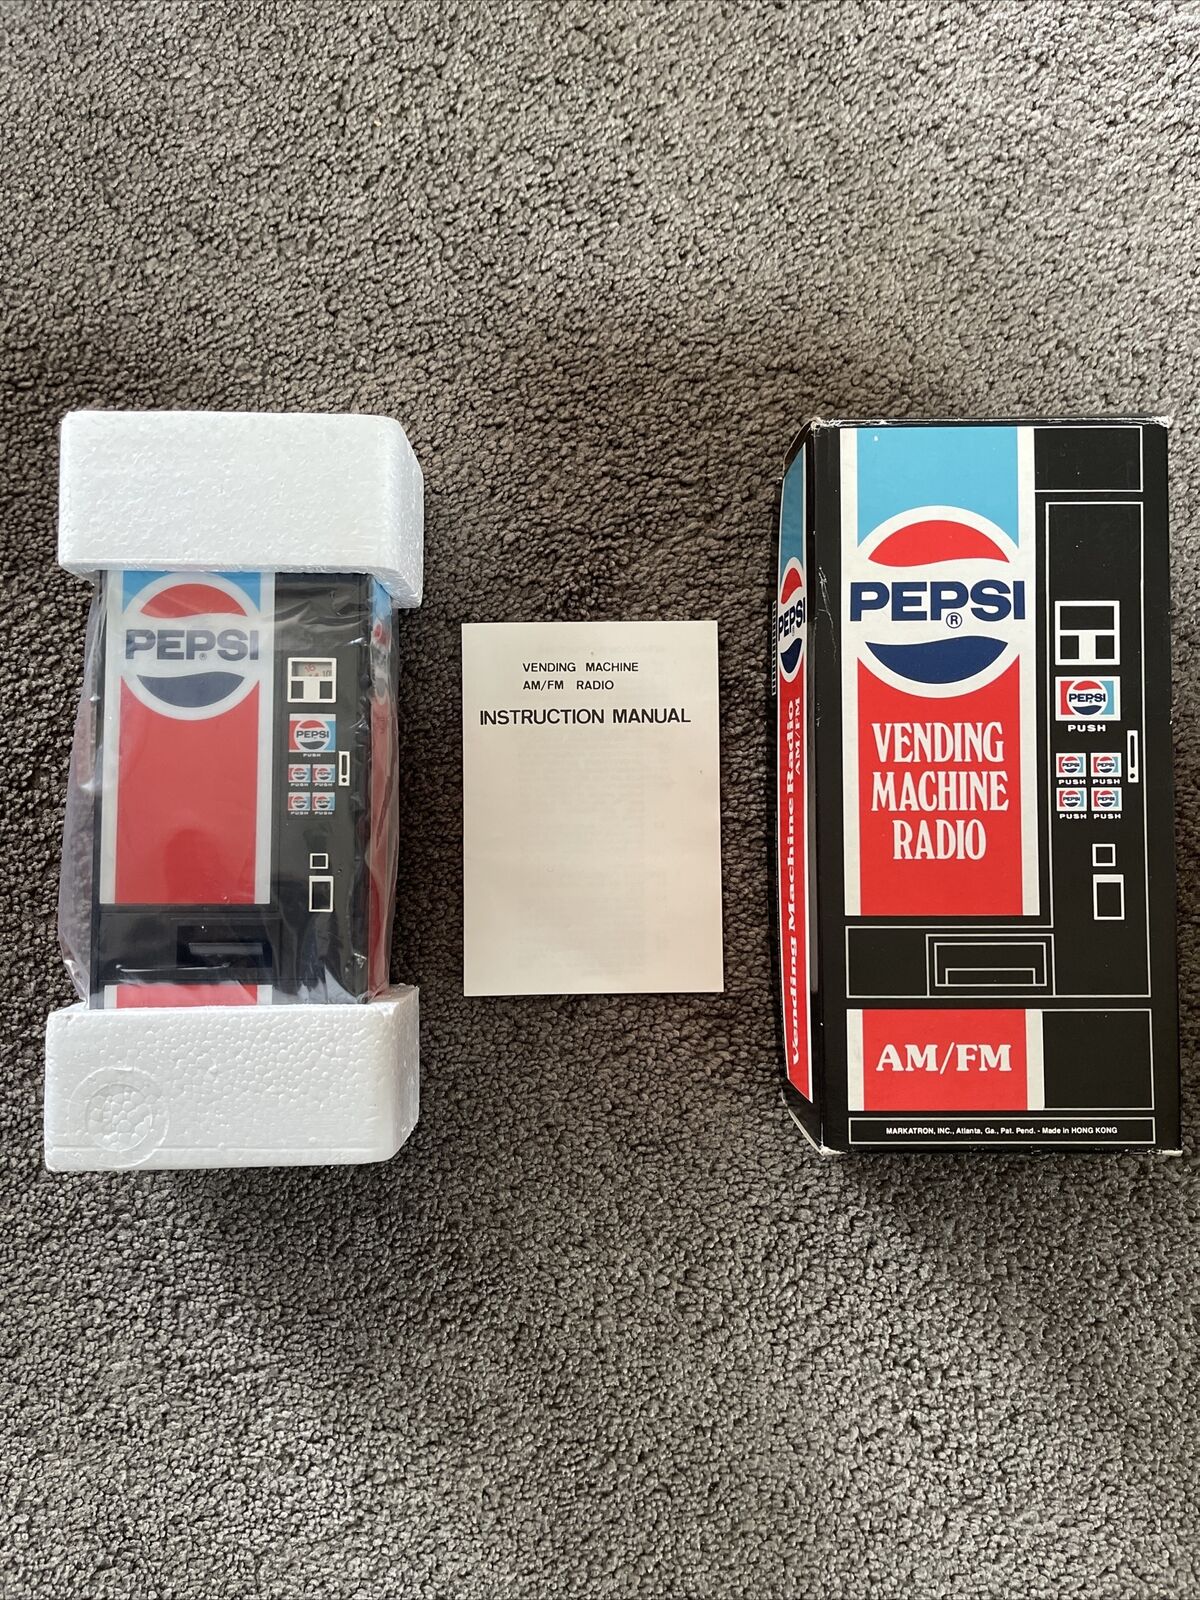 1980s Vintage Pepsi Vending Machine AM/FM Radio NOS Original Box Too Never Used